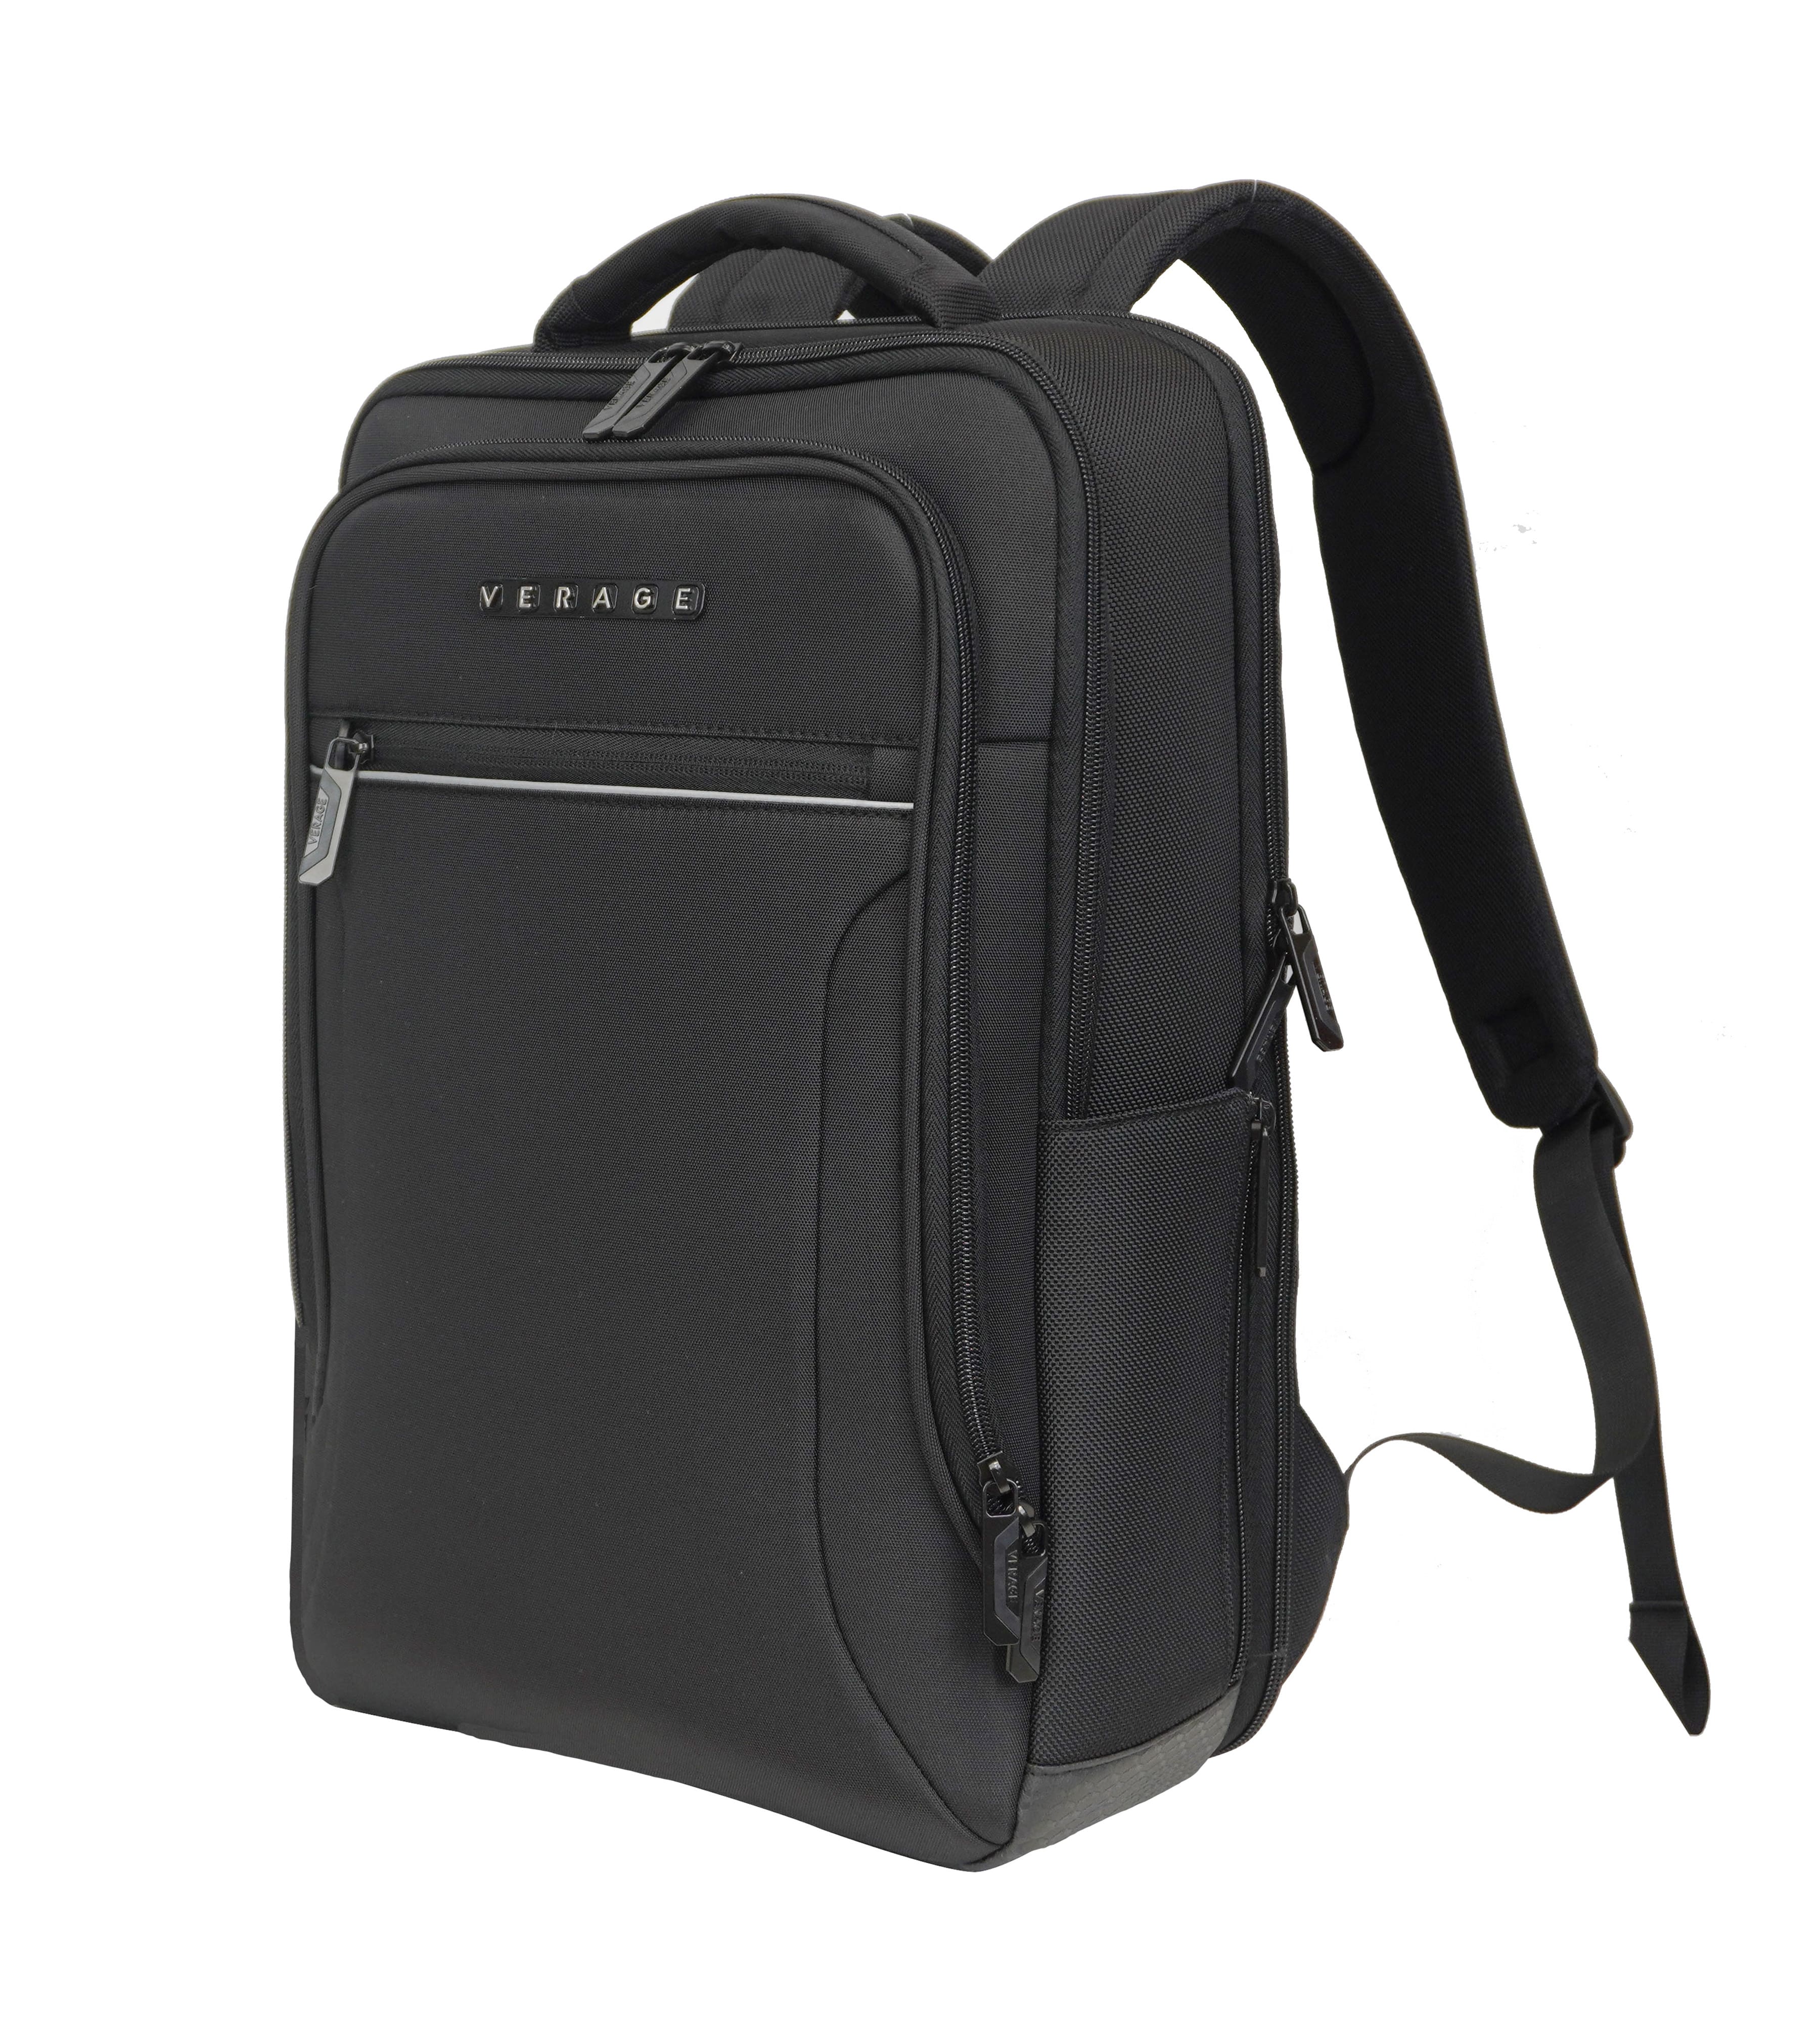 Verage Toledo - The Professional Backpack